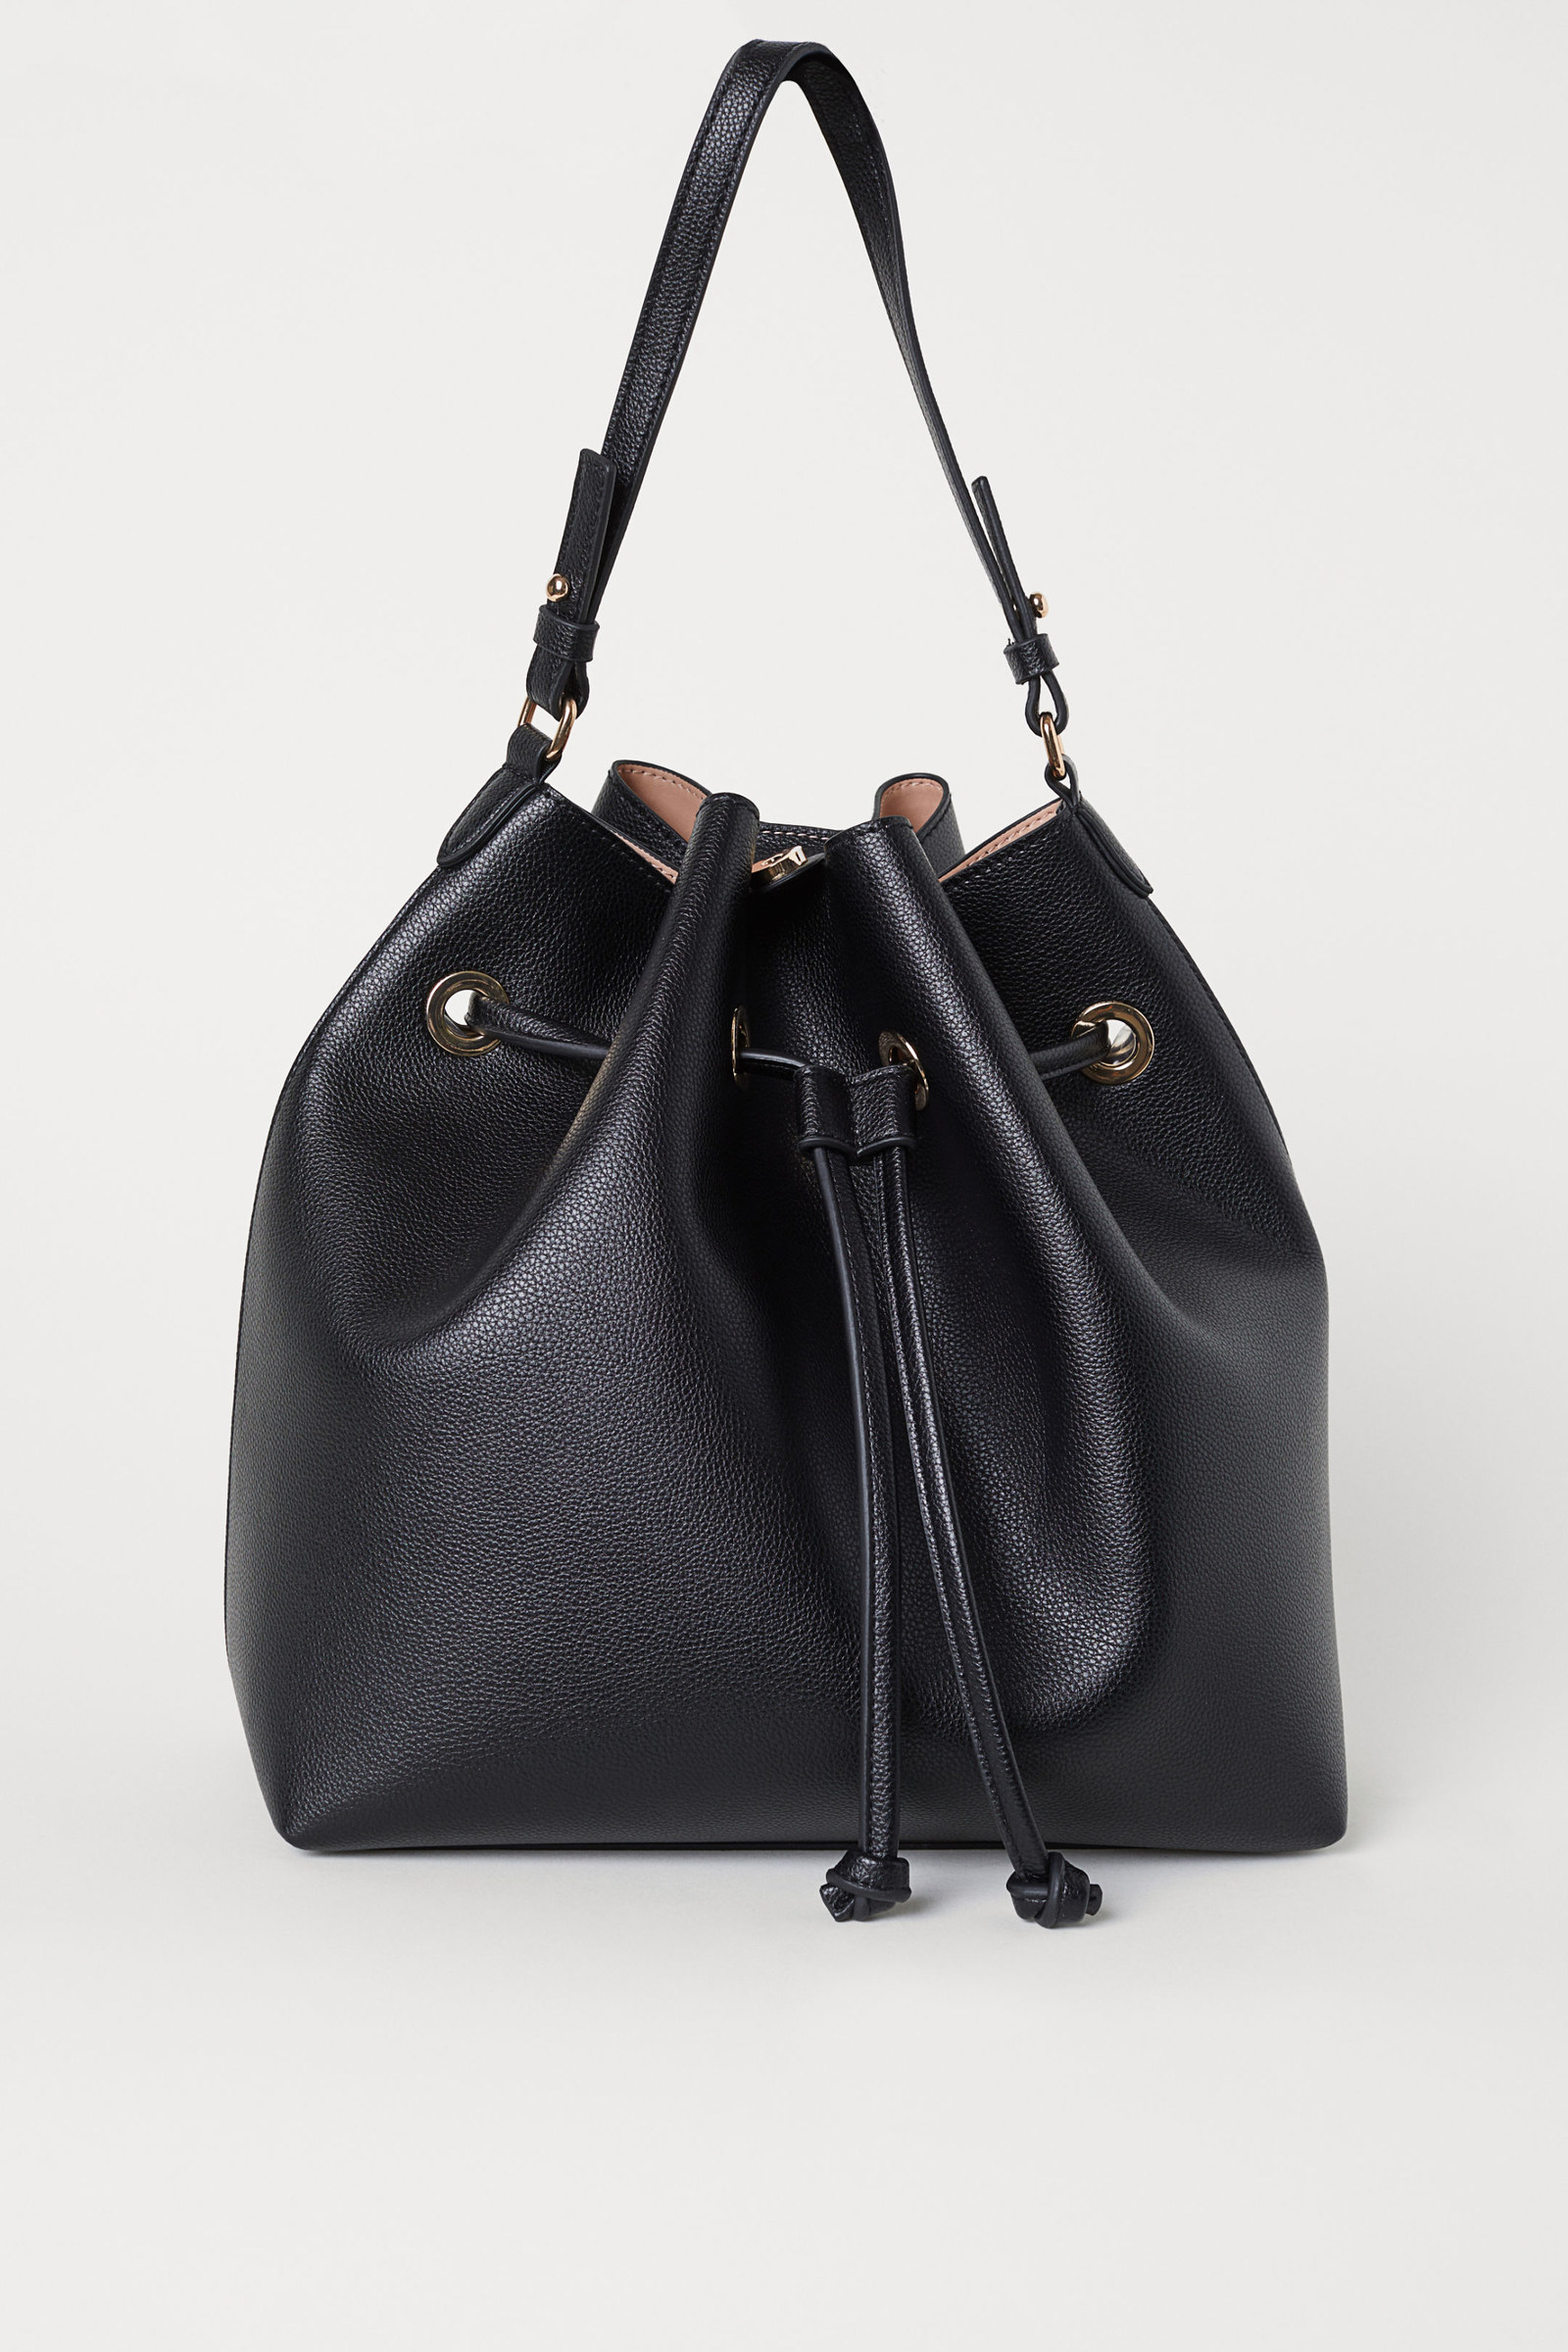 Ladies handbags online shopping